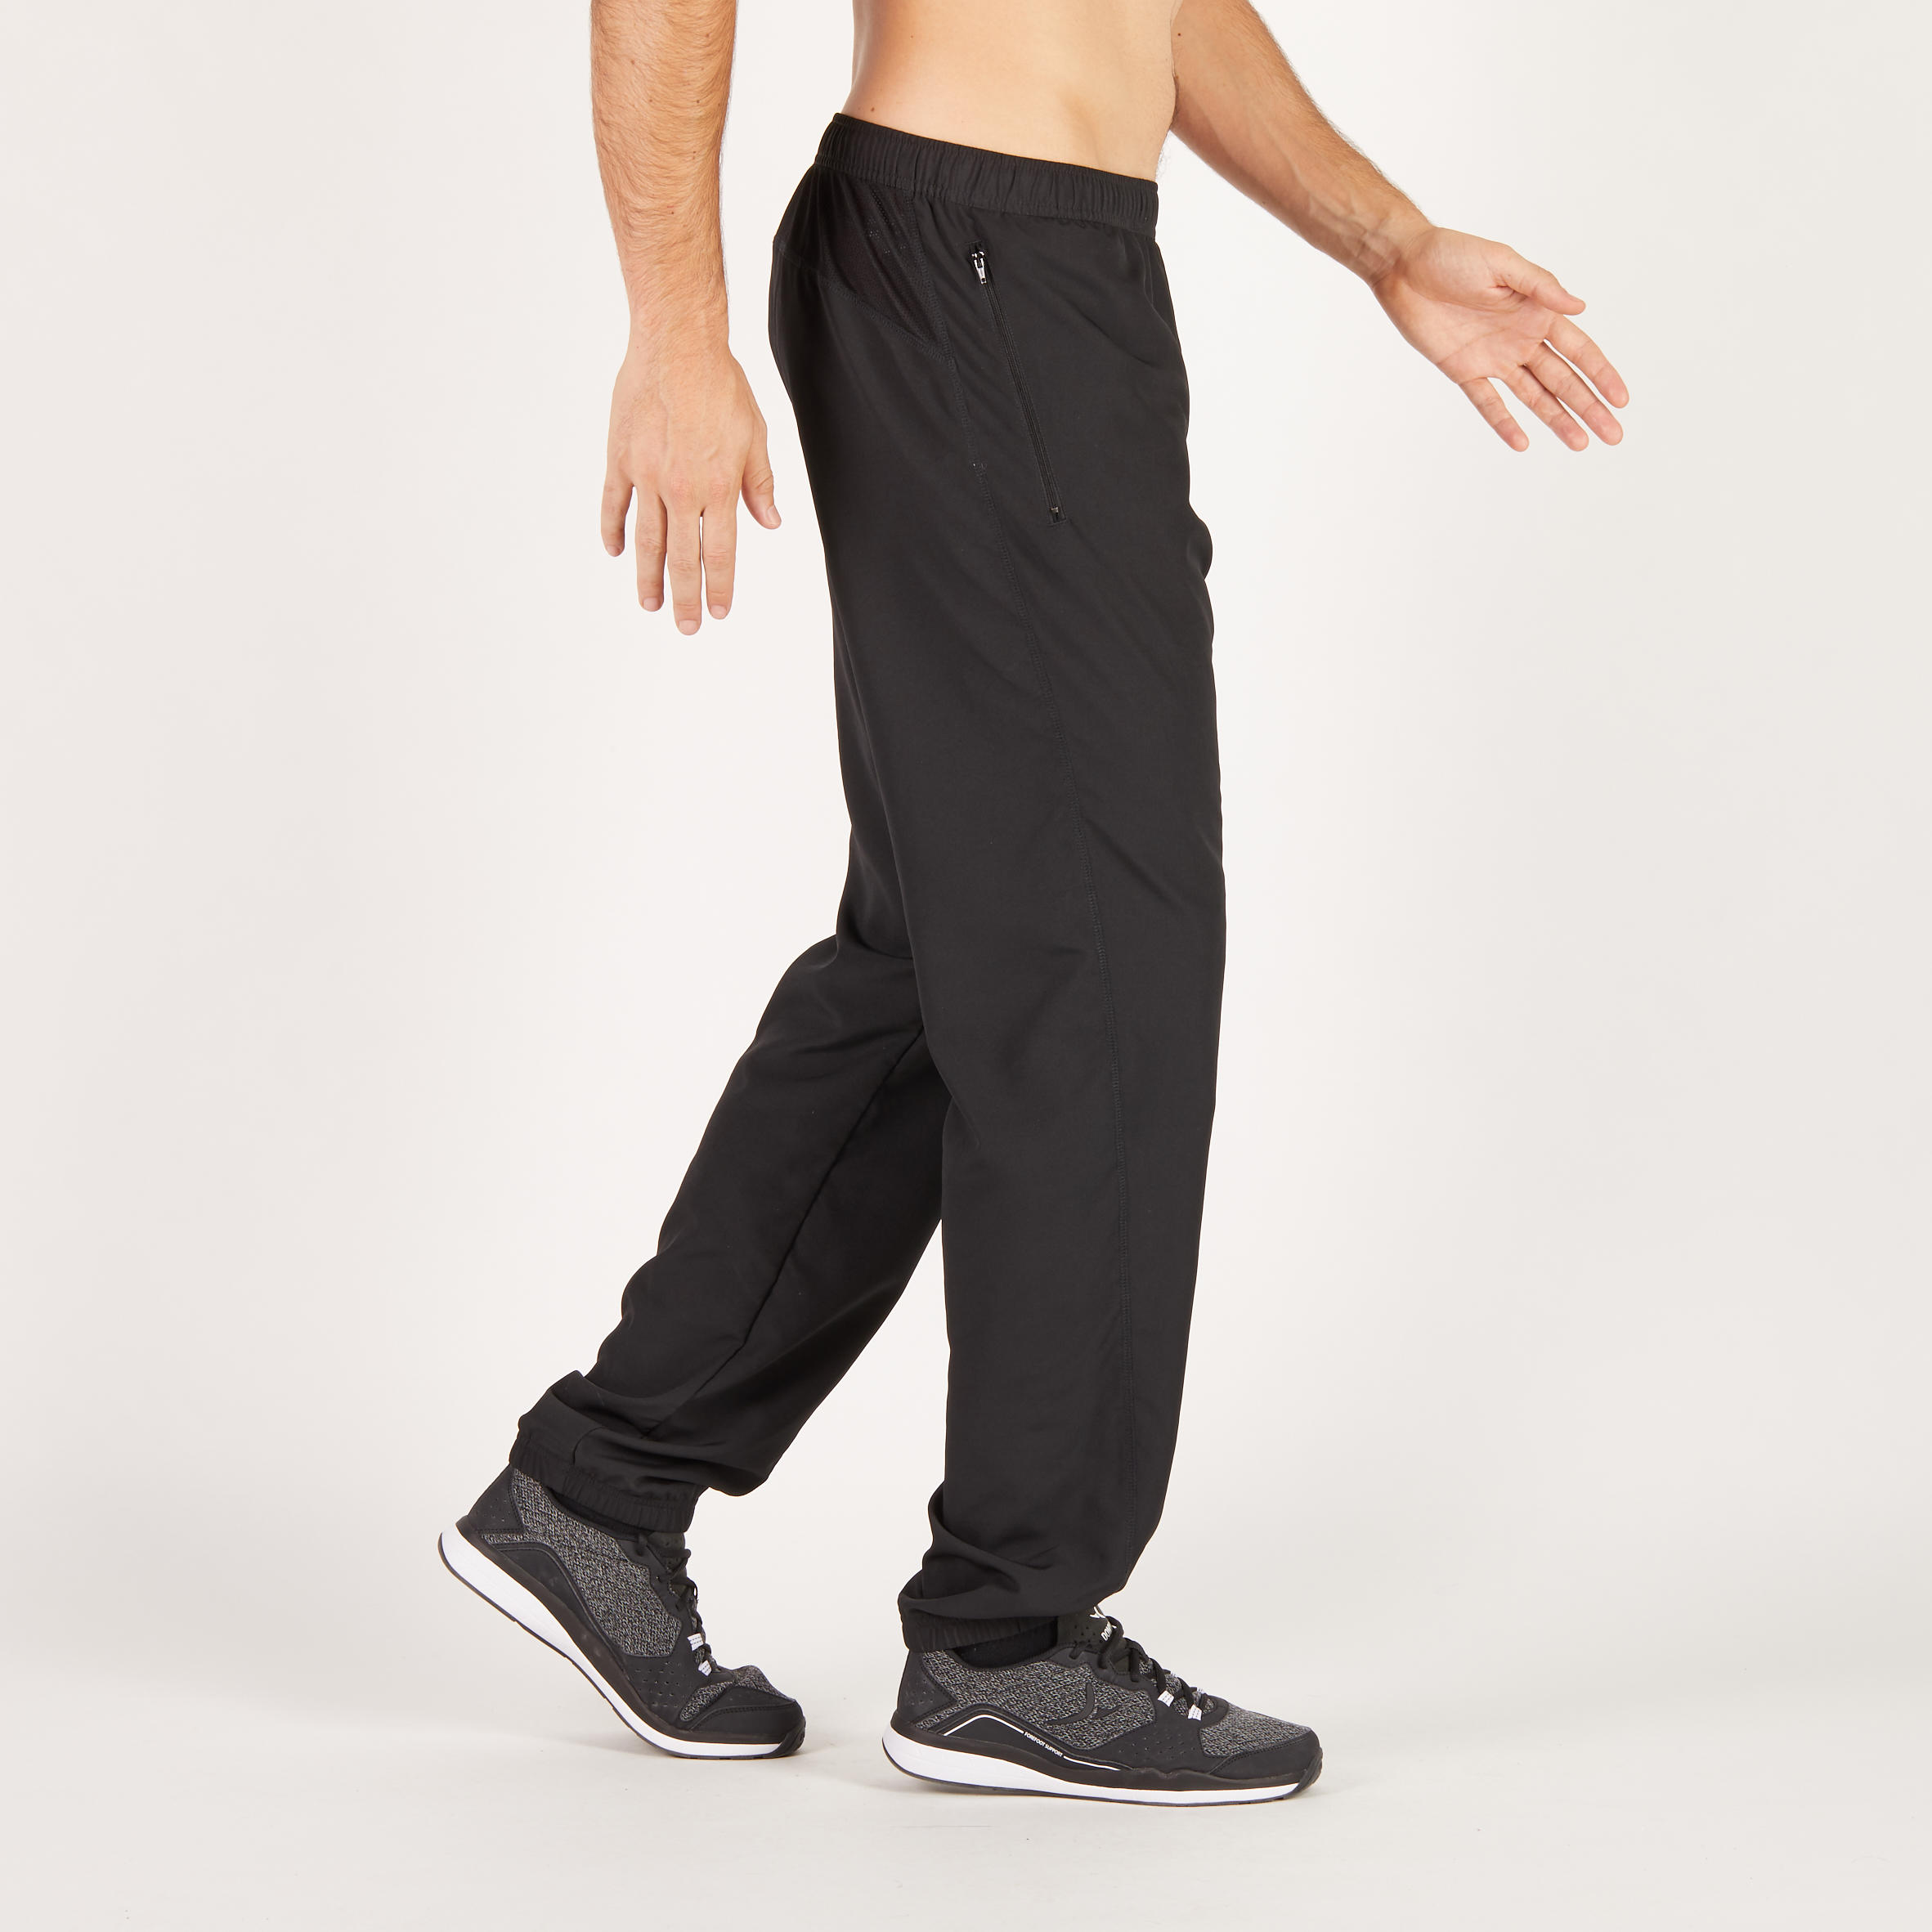 Zip Pocket Quick Dry Fitness Pant - Black